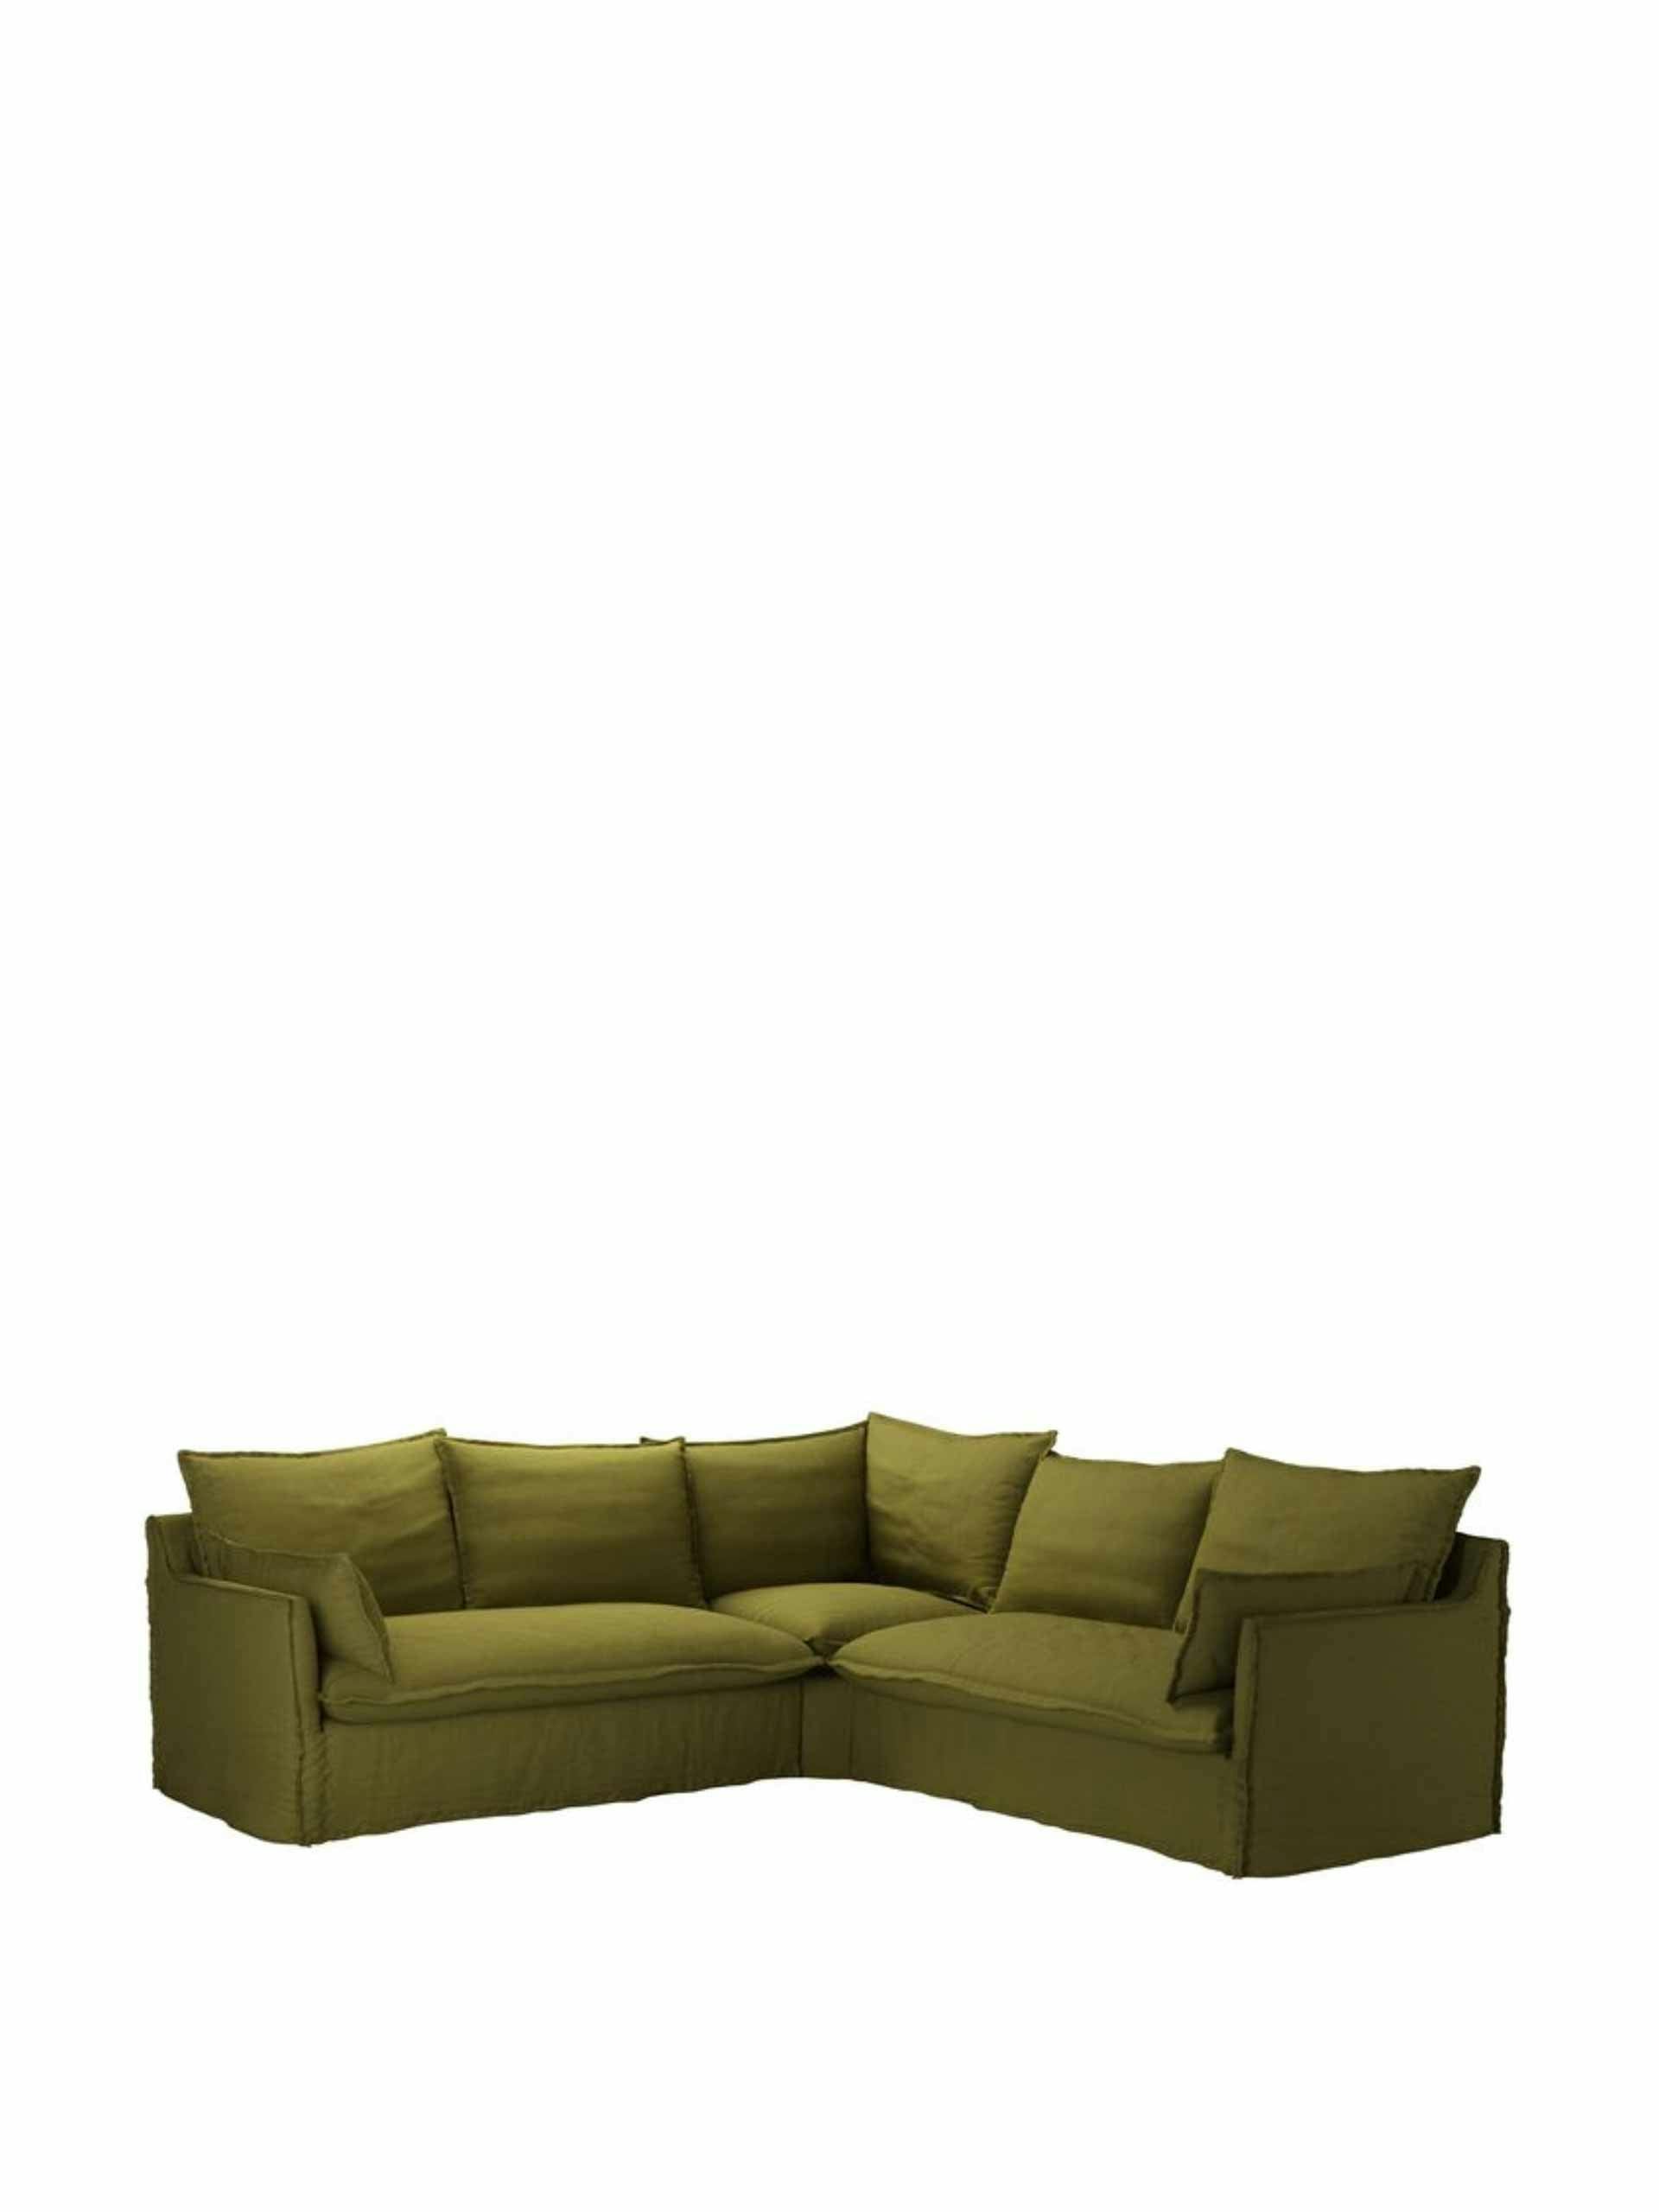 Brushed linen cotton corner sofa